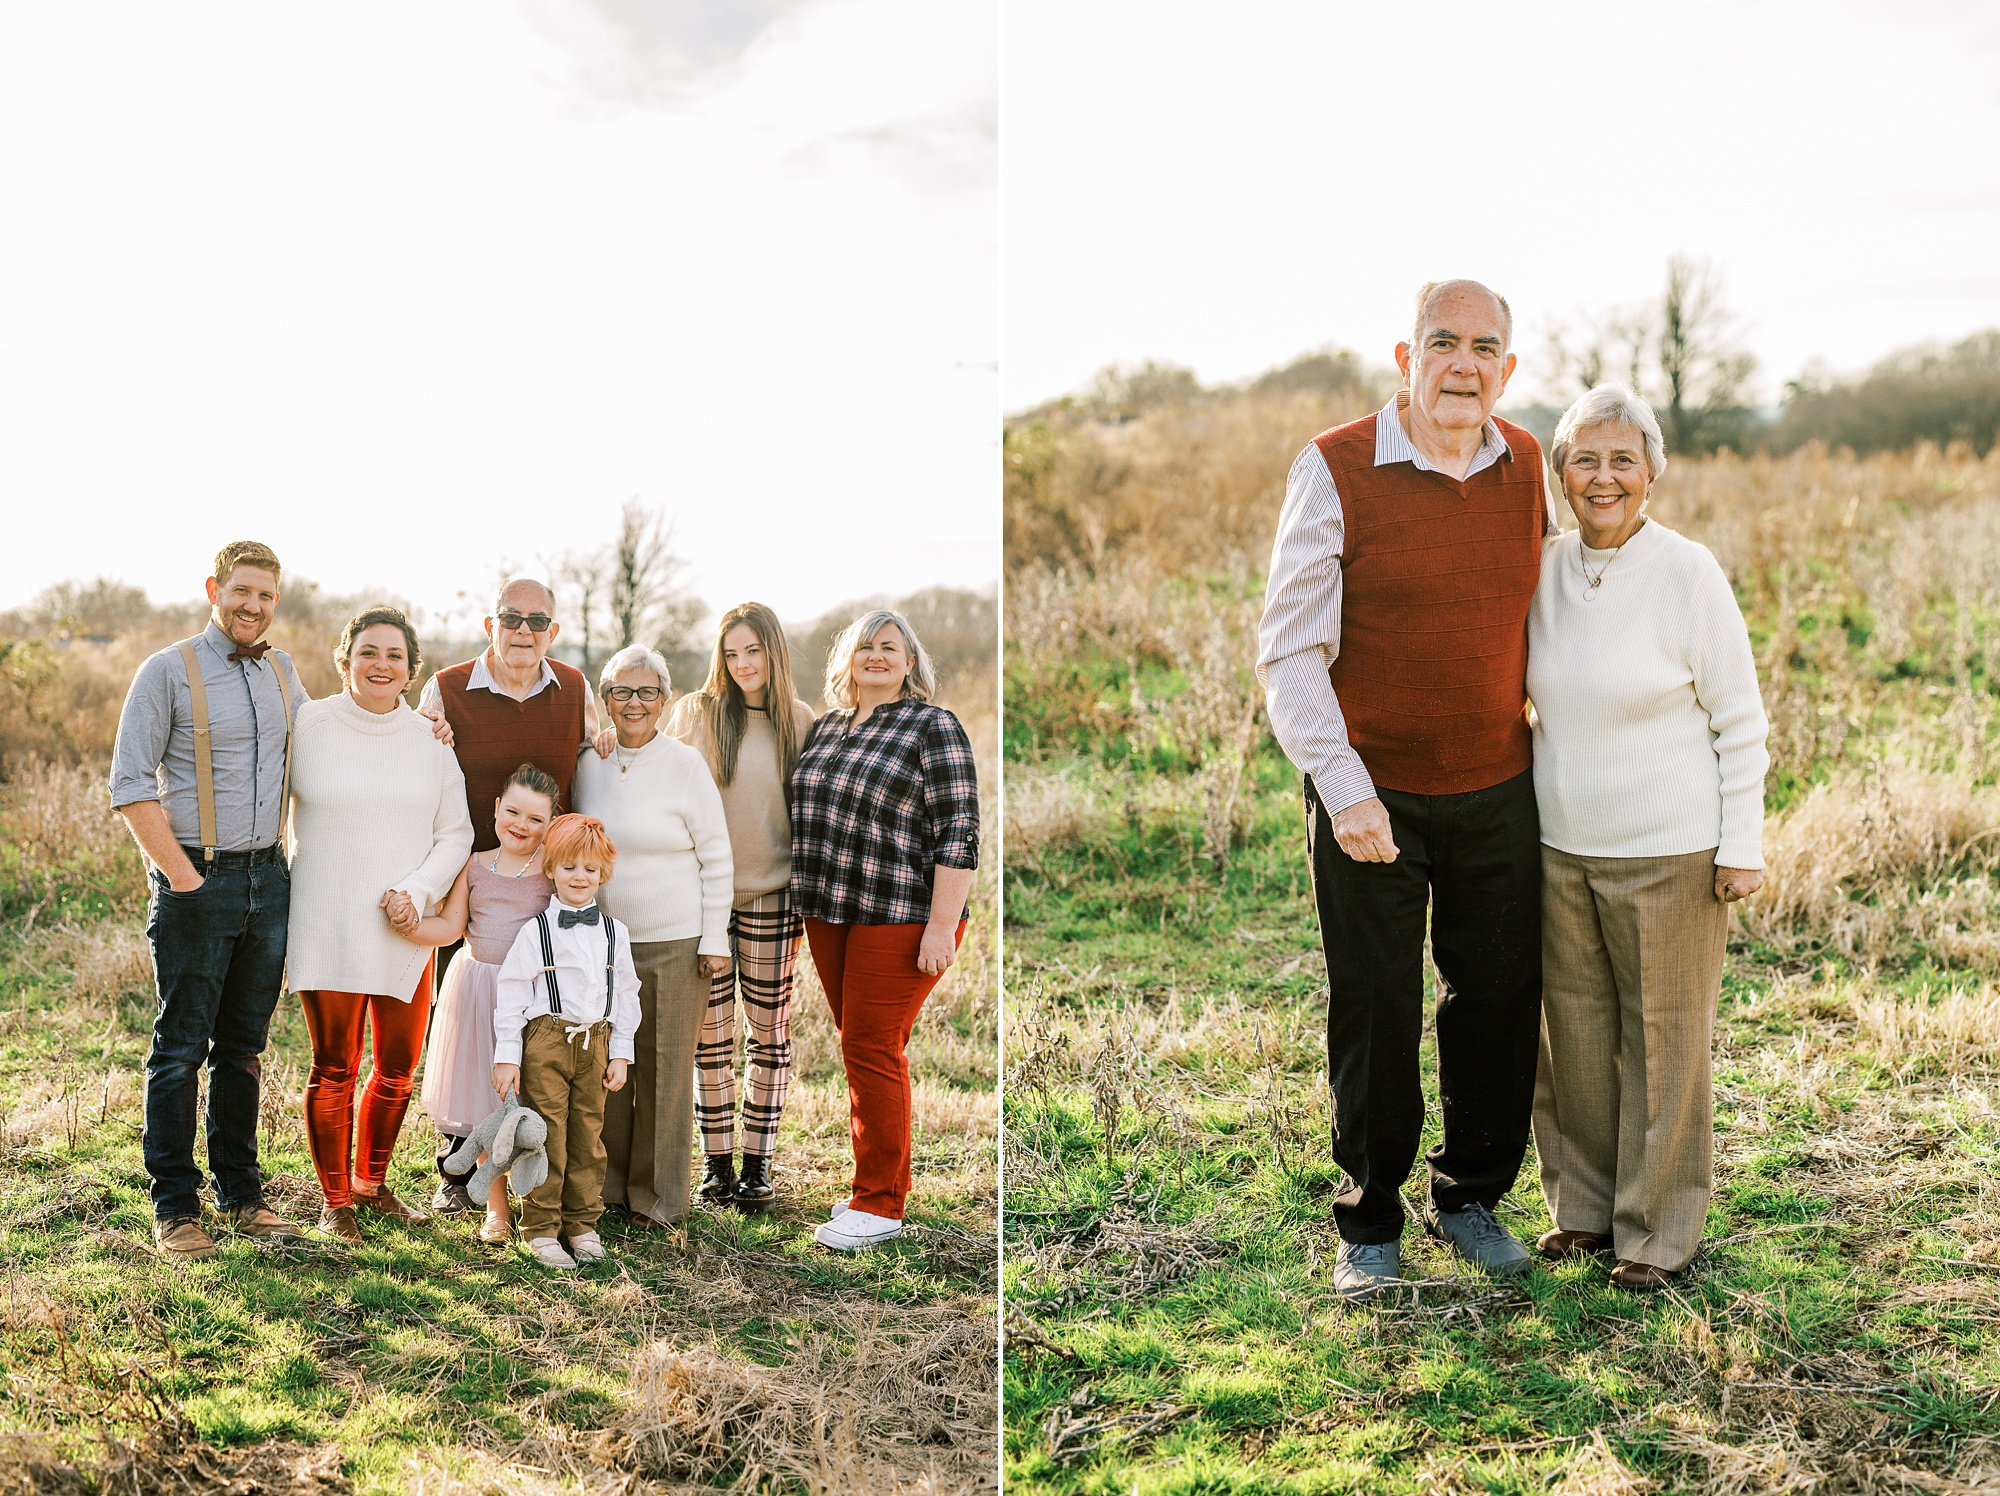 50th anniversary photos with family on farm